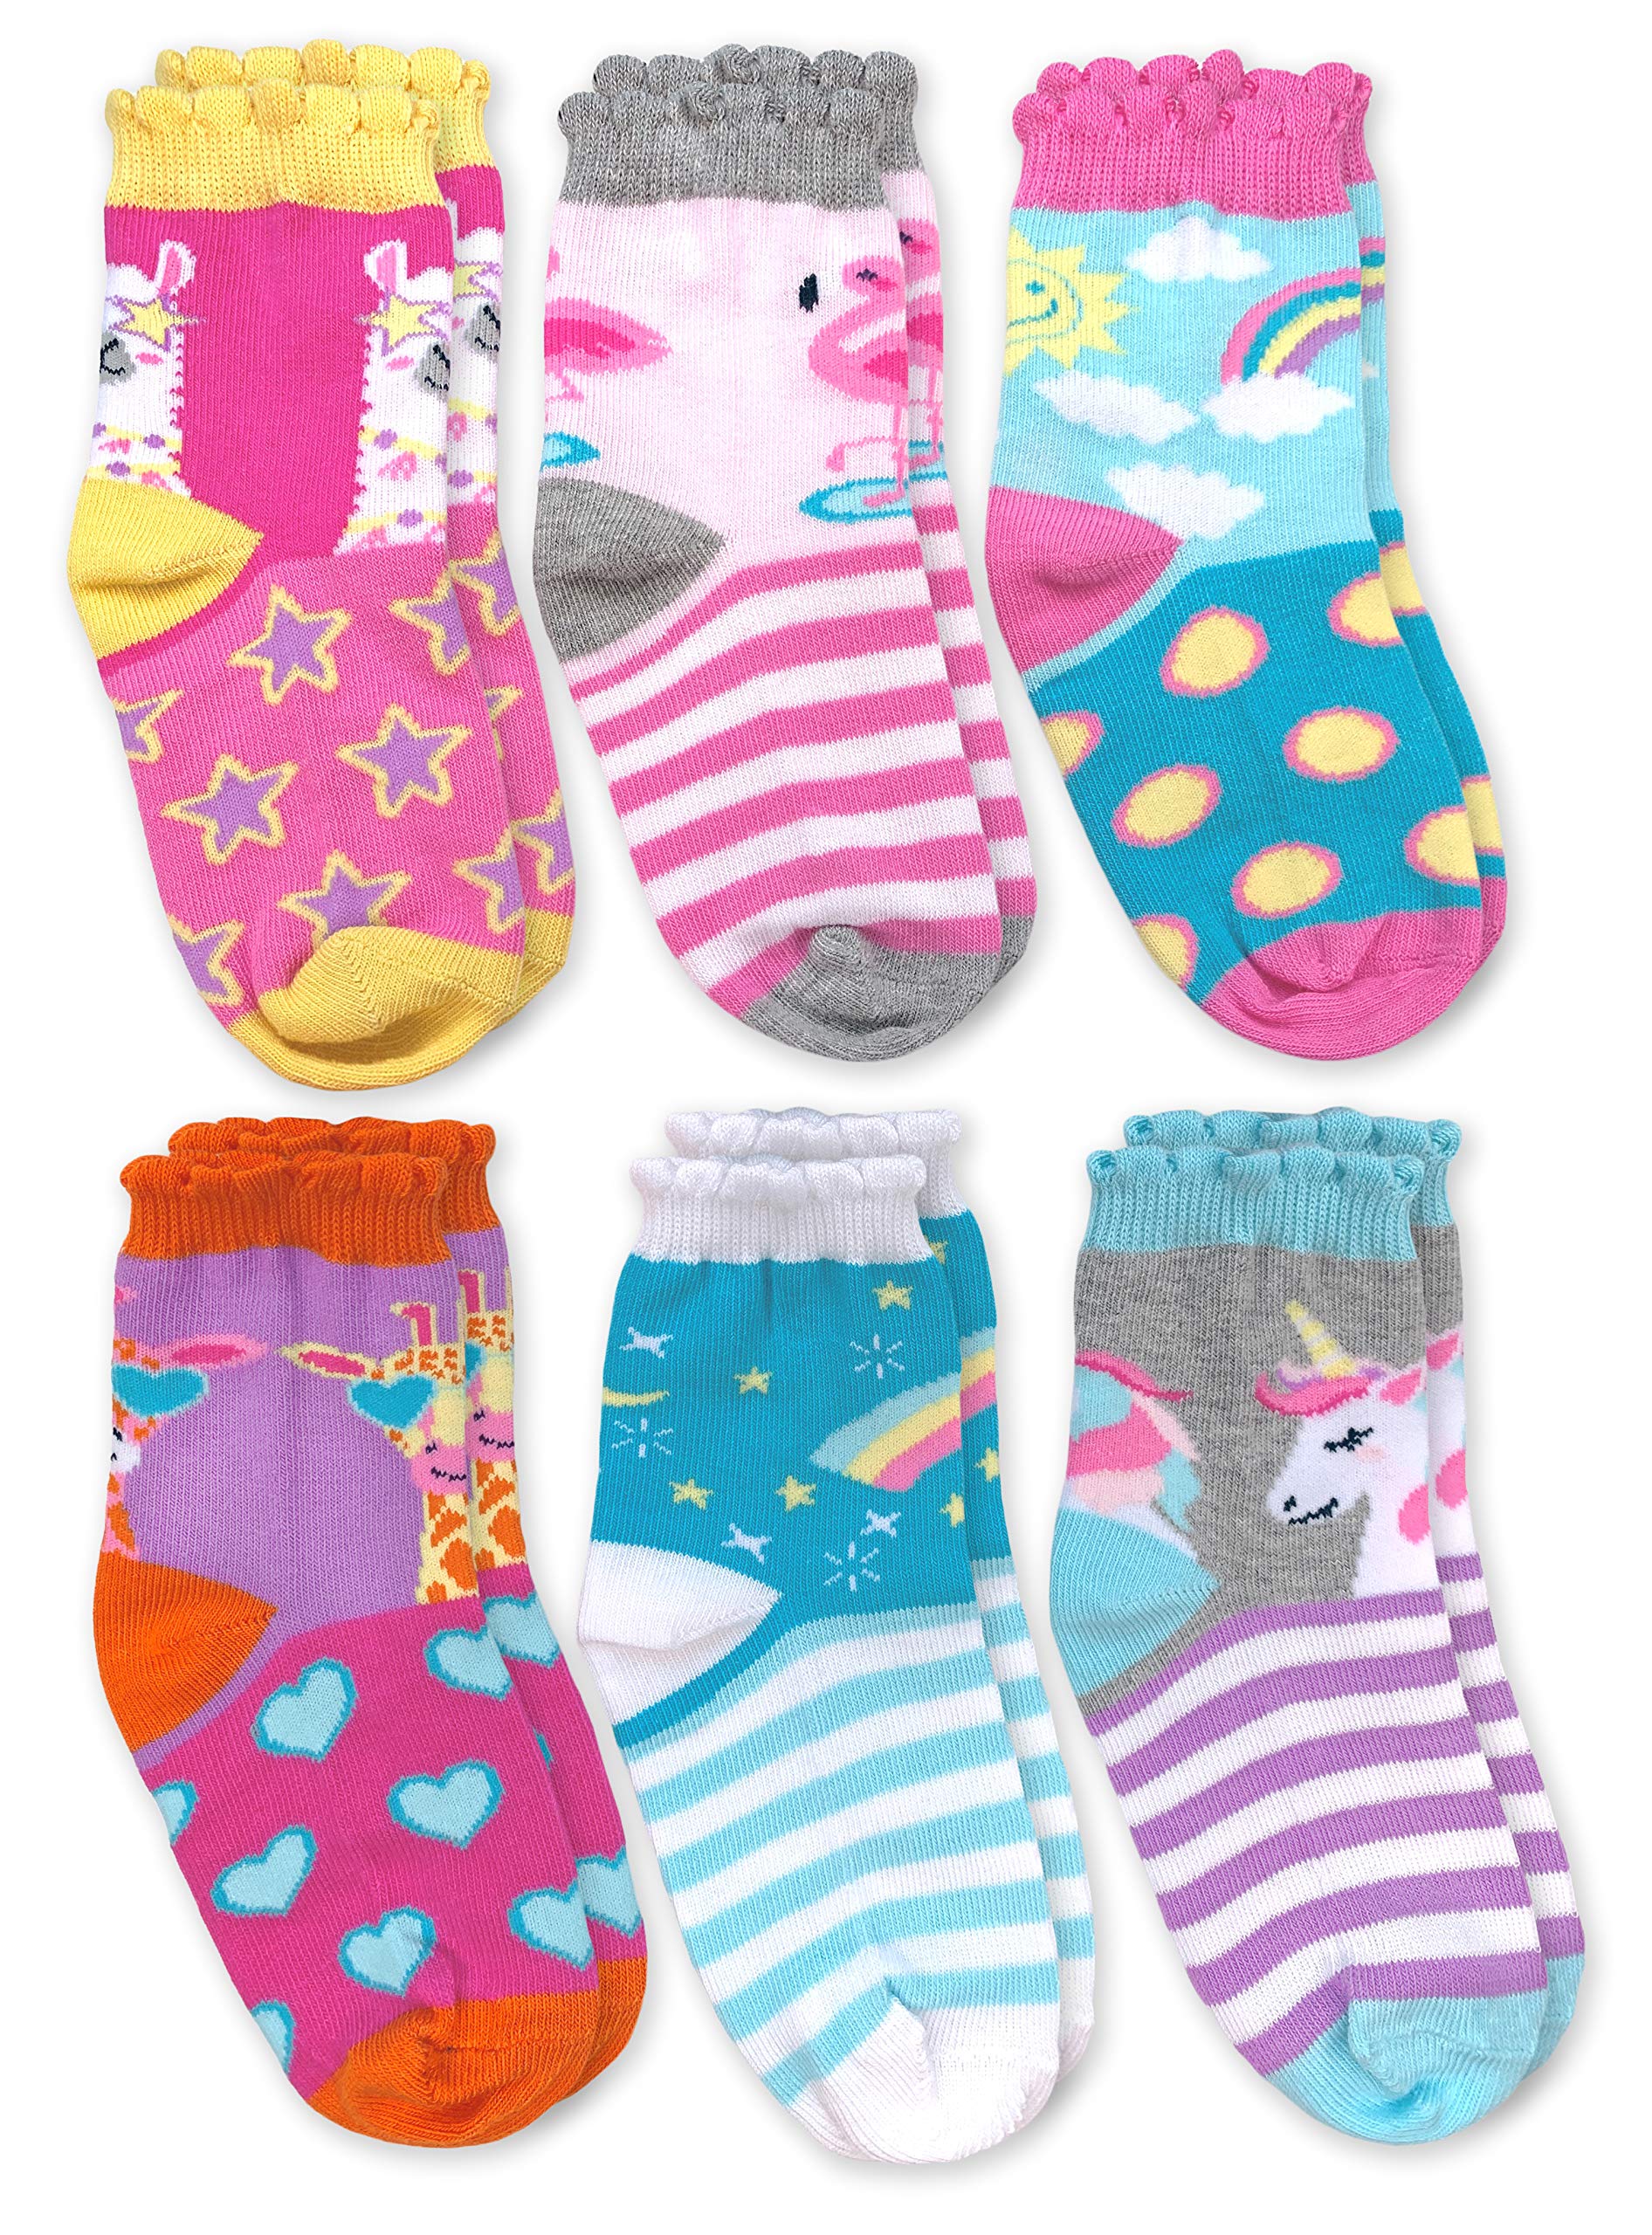 Jefferies Socks Girl's Unicorn Llama Giraffe Flamingo Novelty Pattern Crew Socks 6 Pack